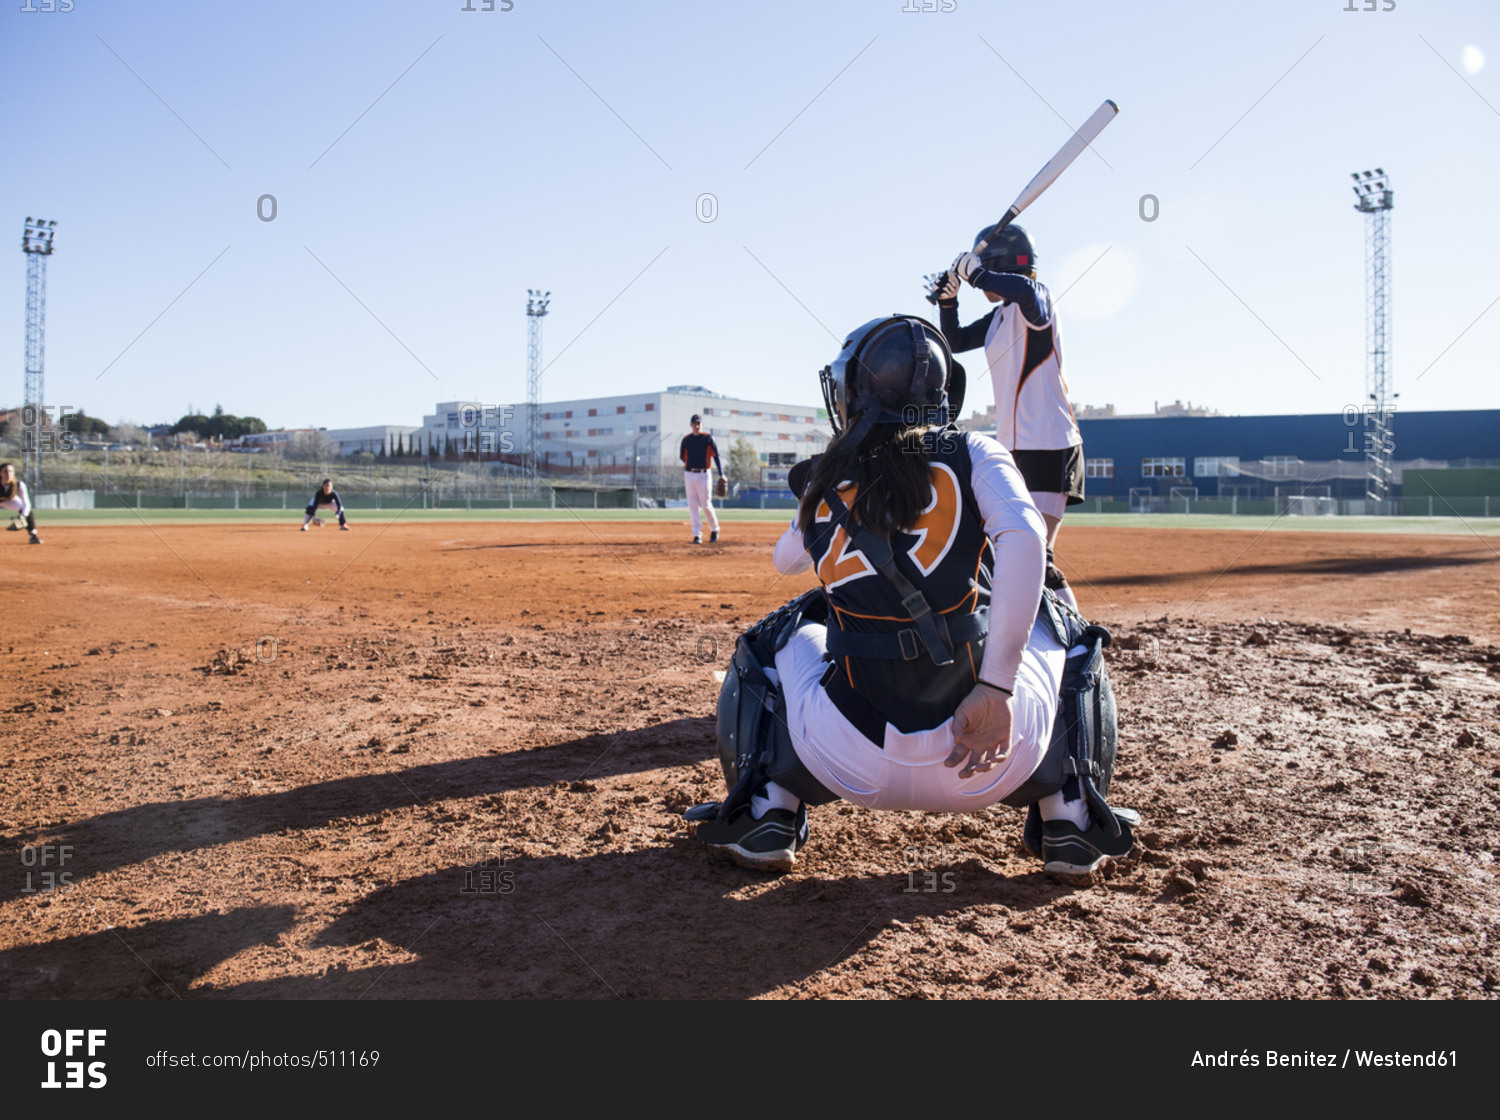 Baseball players during a baseball game